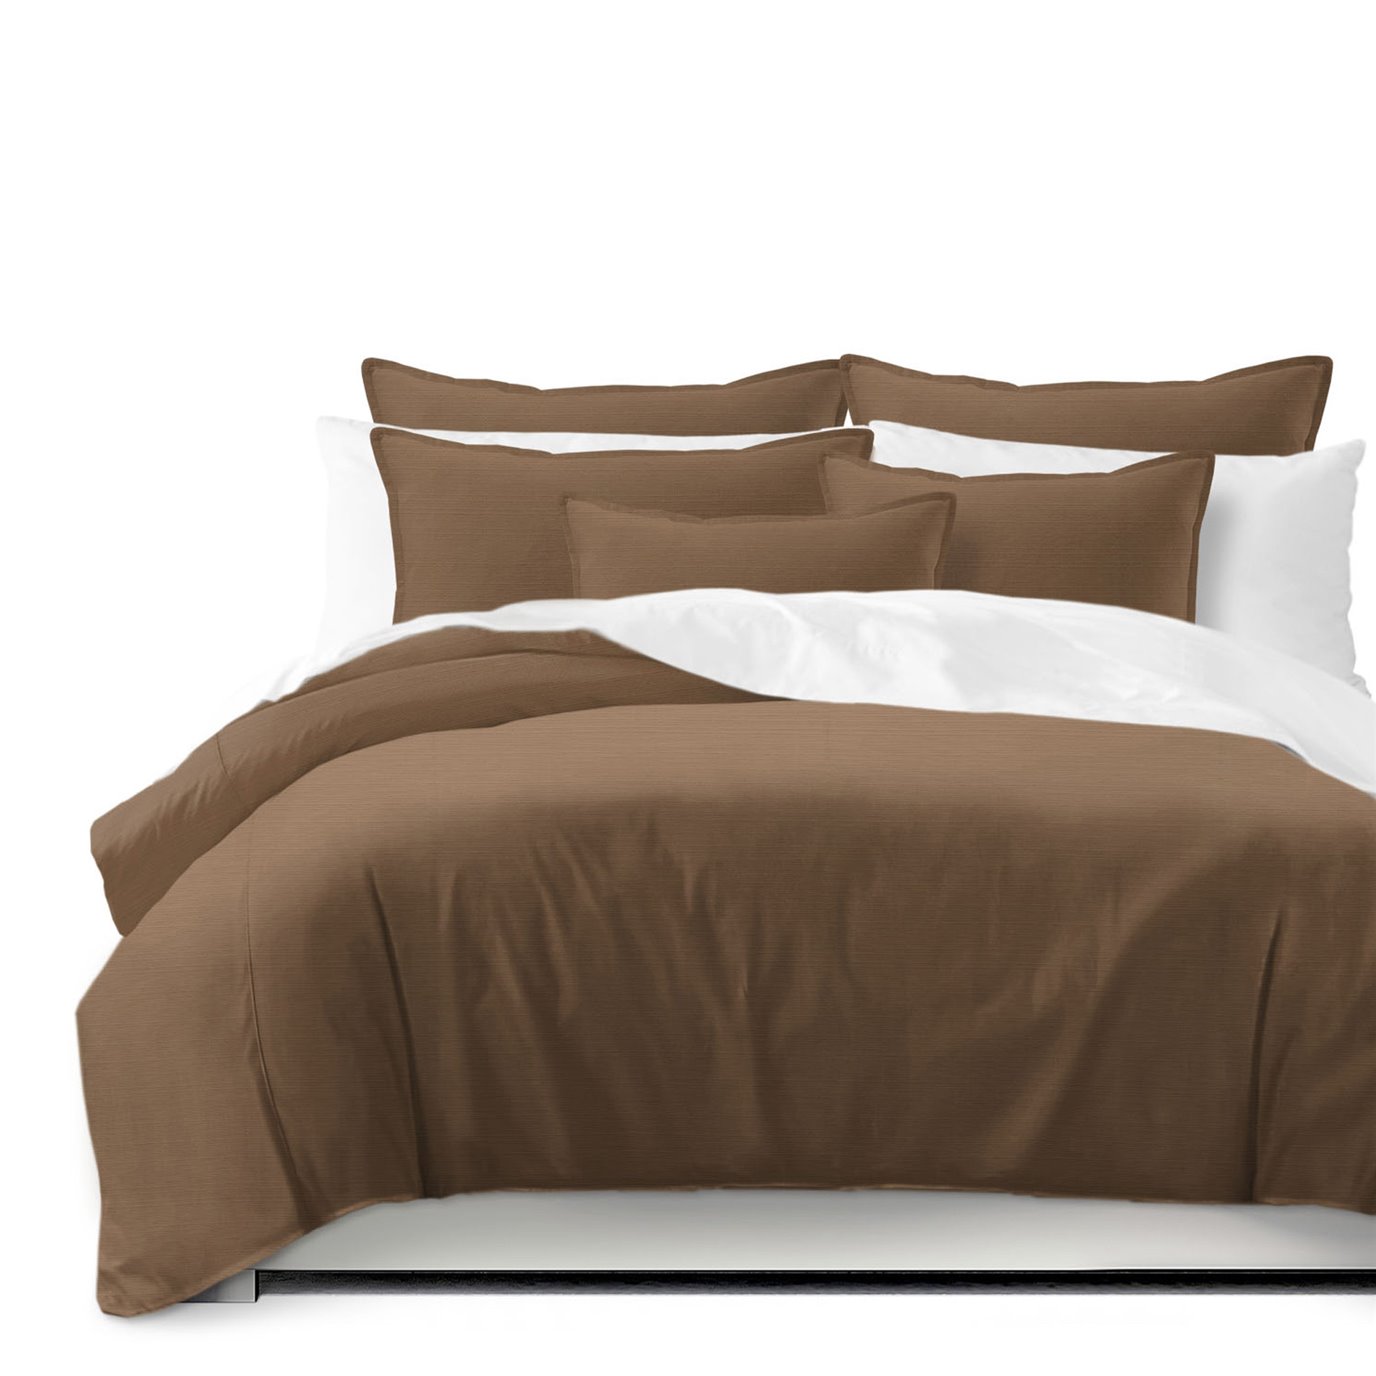 Nova Walnut Coverlet and Pillow Sham(s) Set - Size Super King